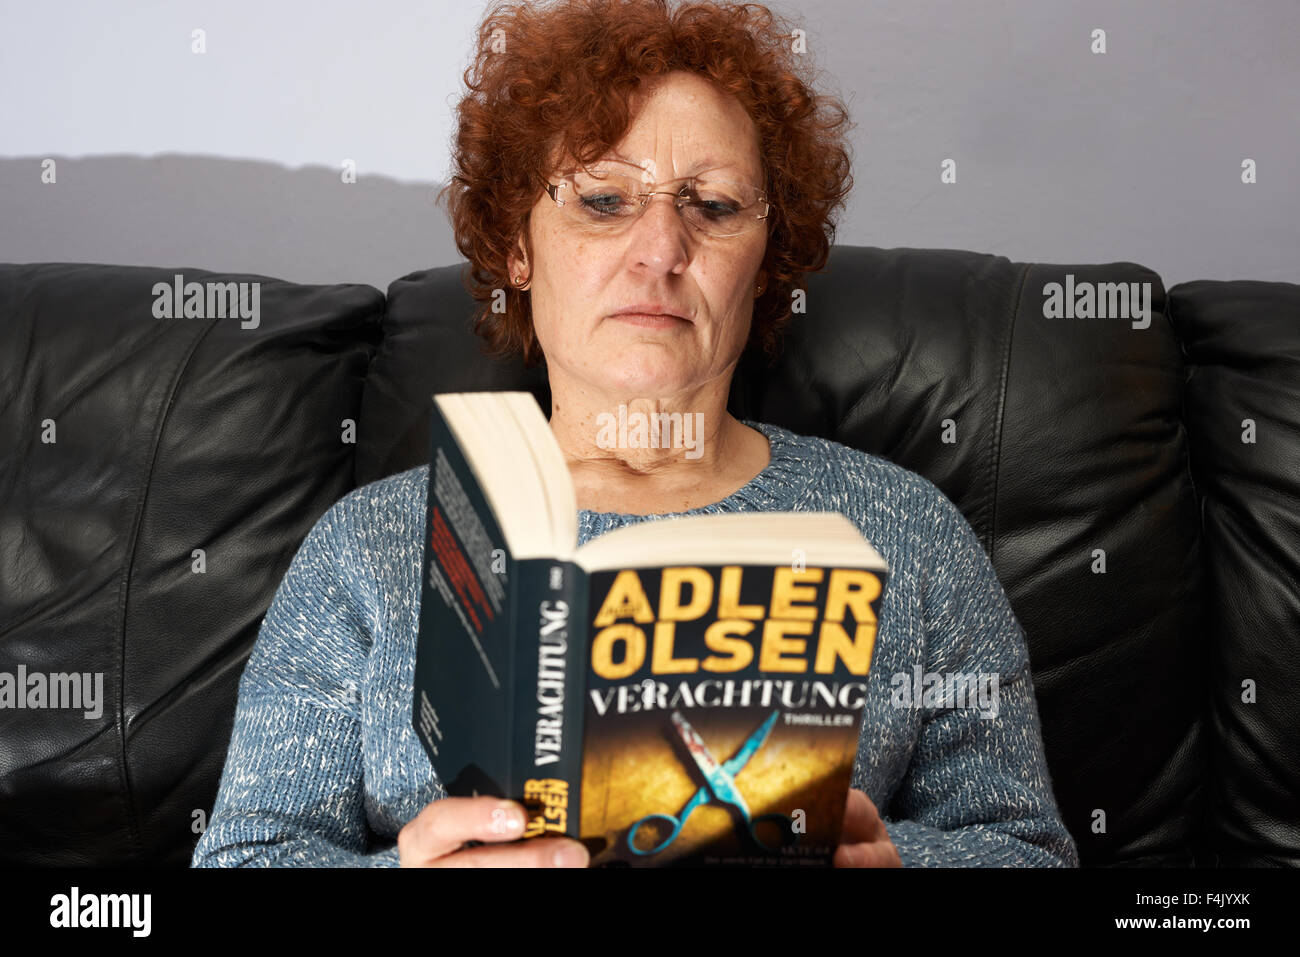 La mujer en el hogar lectura Adler Olsen "thriller Verachtung' Foto de stock